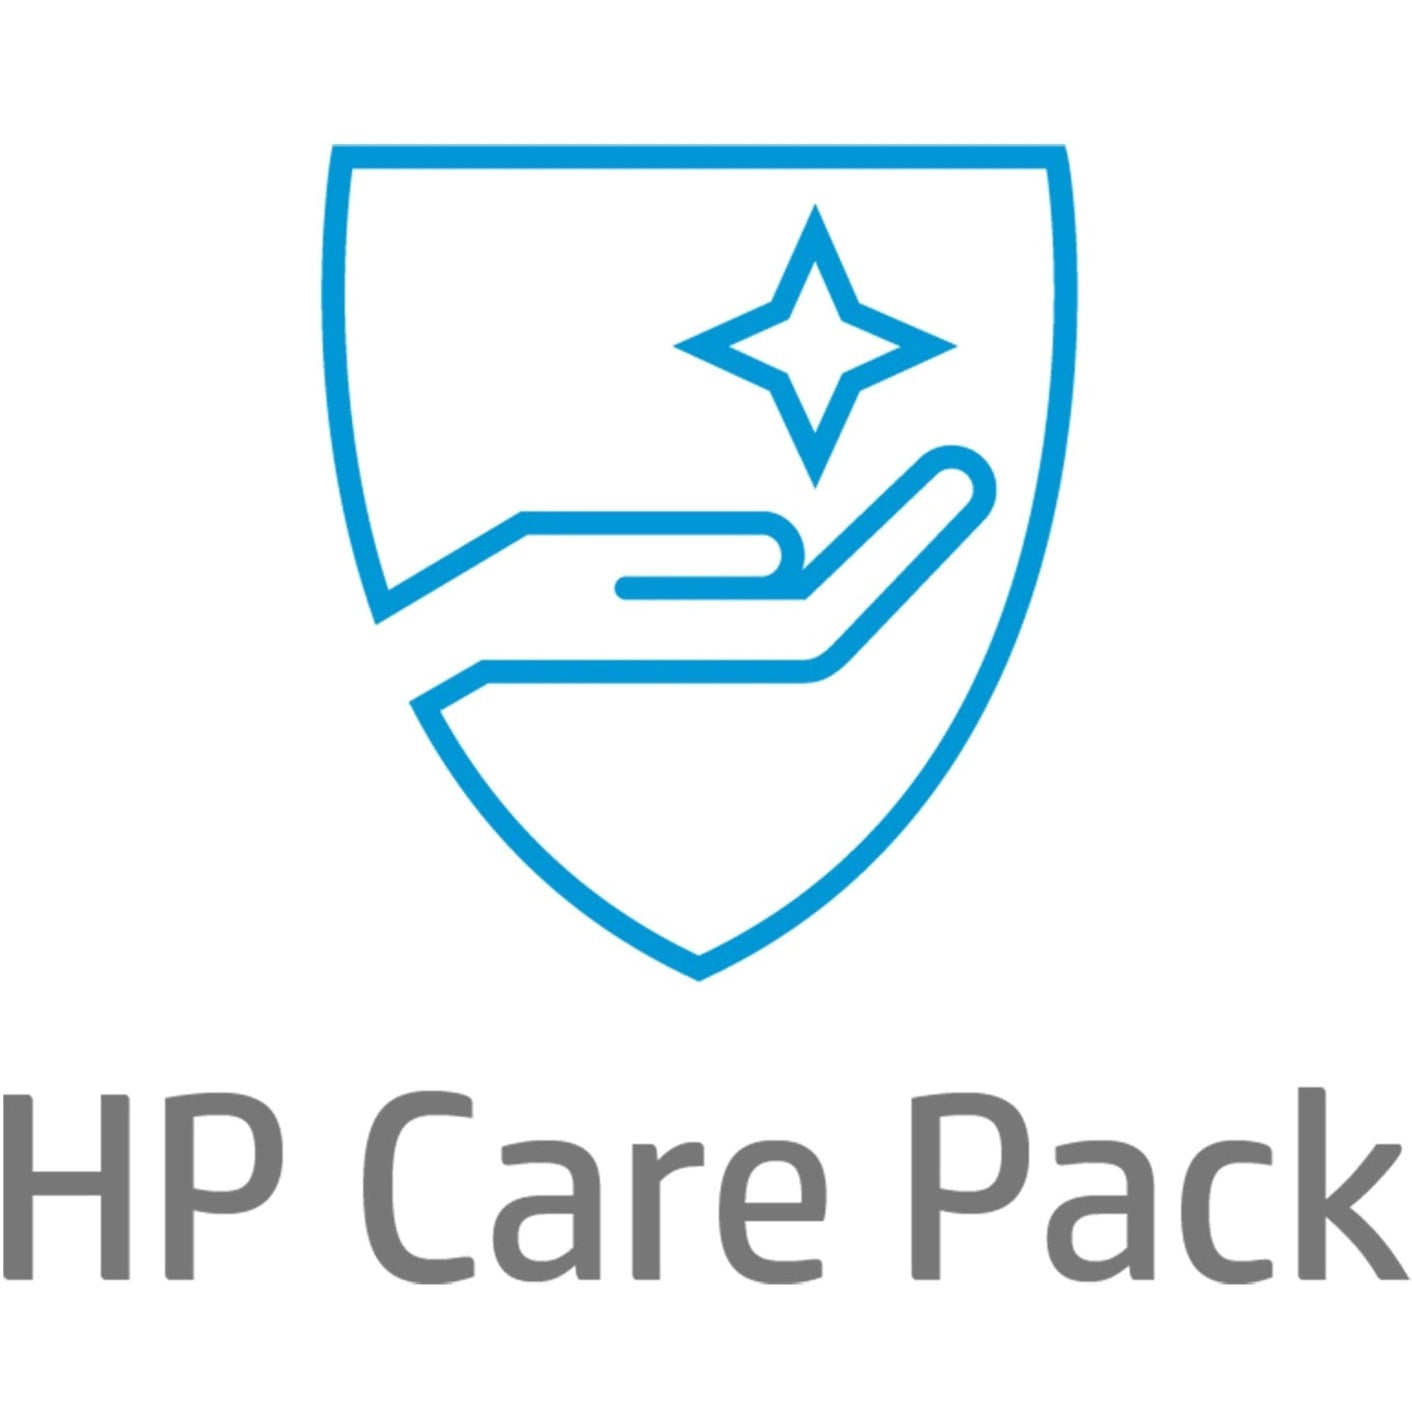 HP Care Pack - 4 Year - Warranty (U7868E)